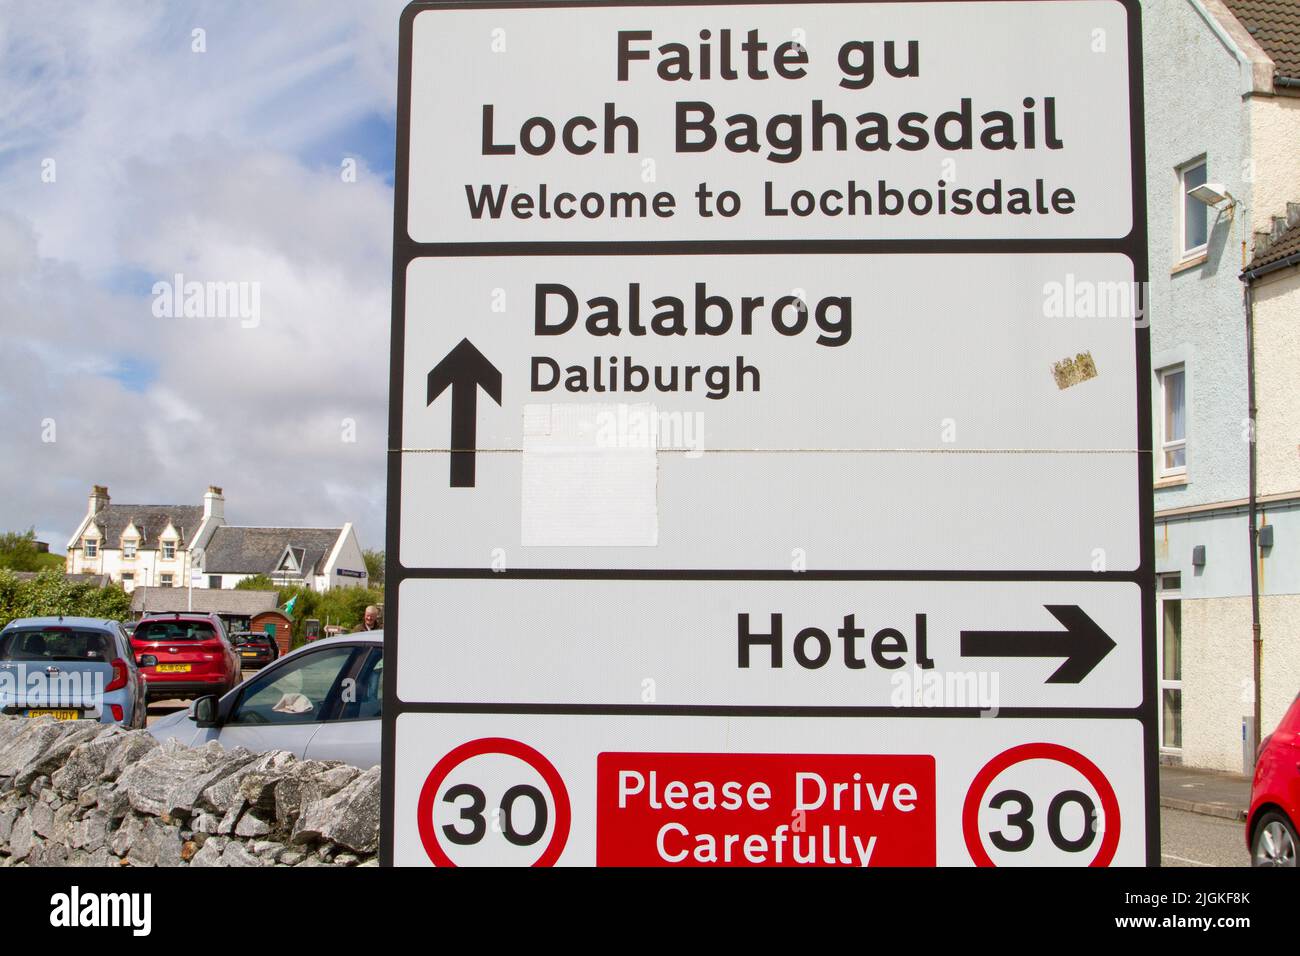 Benvenuti a Lochboisdale/Faille gu Loch Baghasdail, segnaletica stradale bilingue a Lochboisdale, South Uist, Outer Hebrides, Scozia Foto Stock